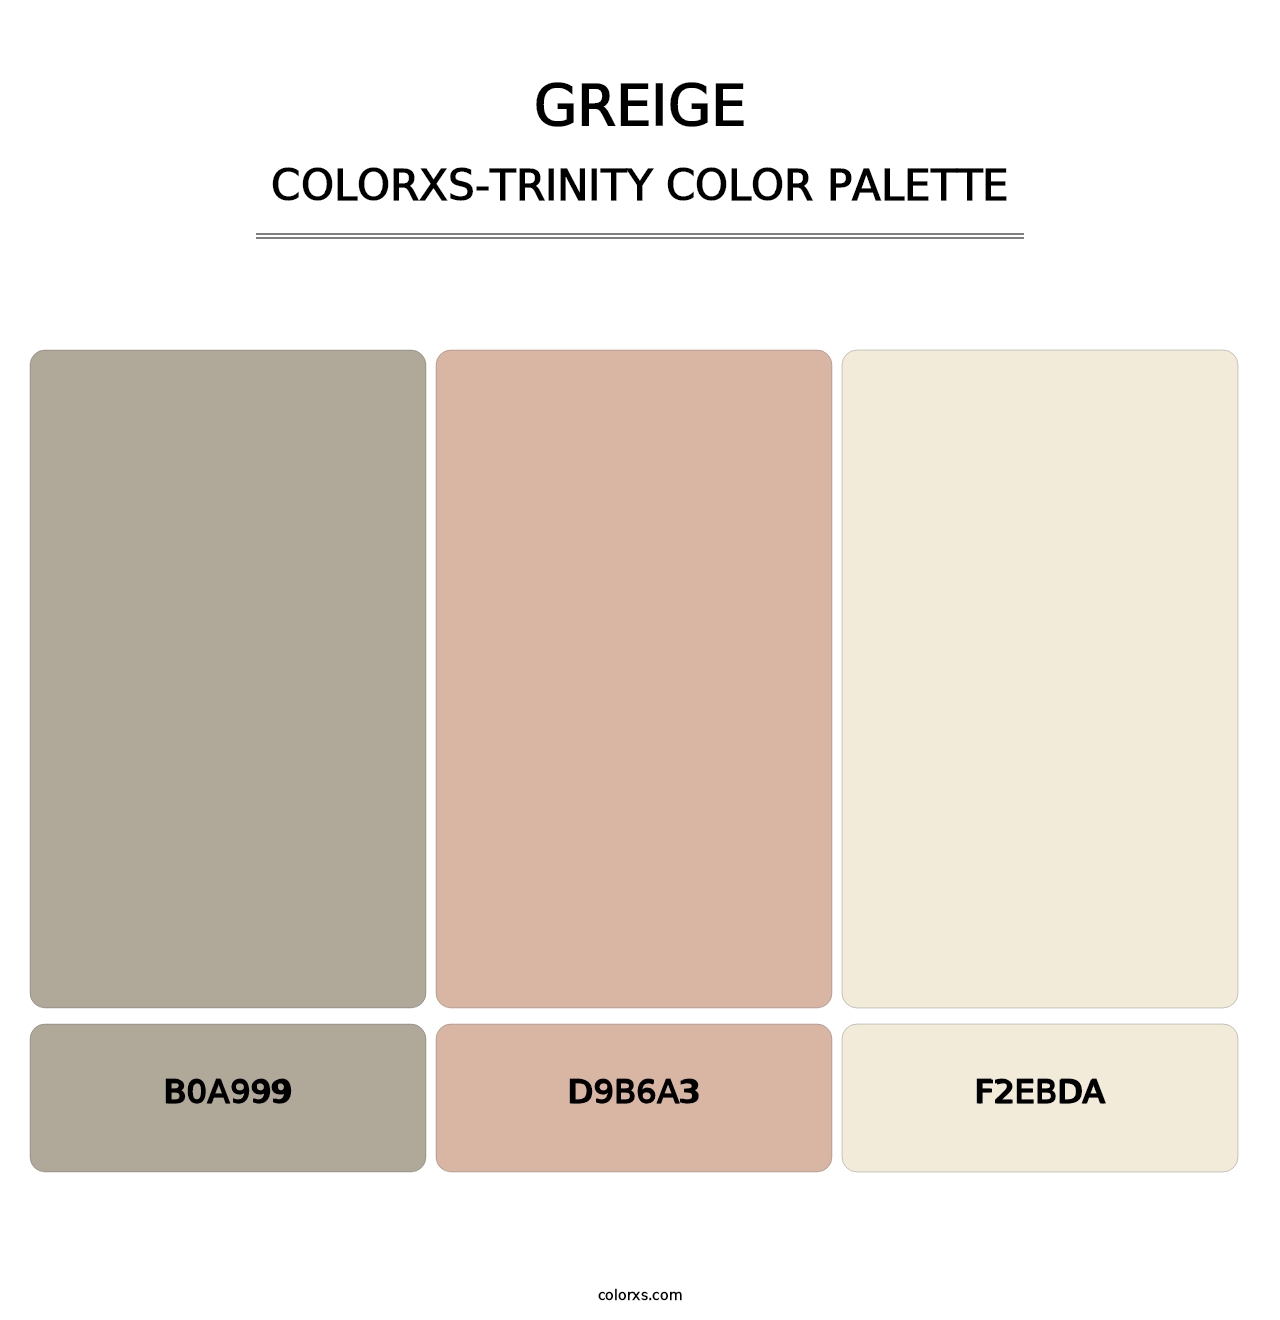 Greige - Colorxs Trinity Palette